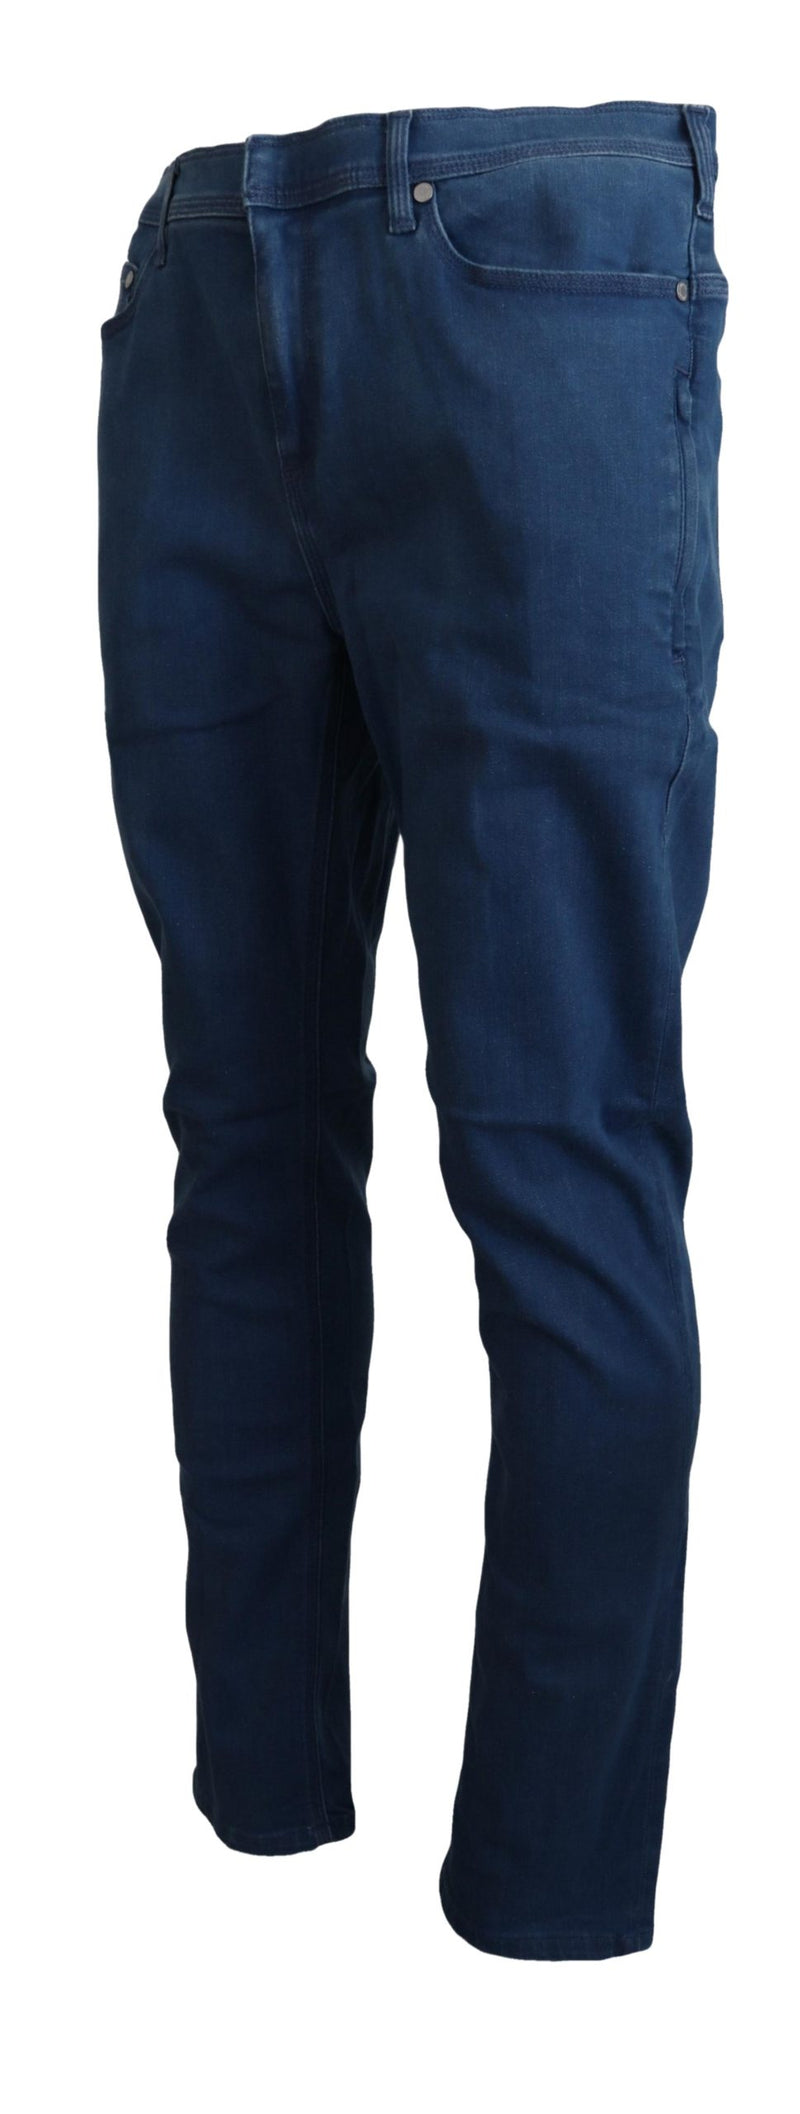 Neil Barrett Chic Skinny Blue Pants for a Sharp Men's Look